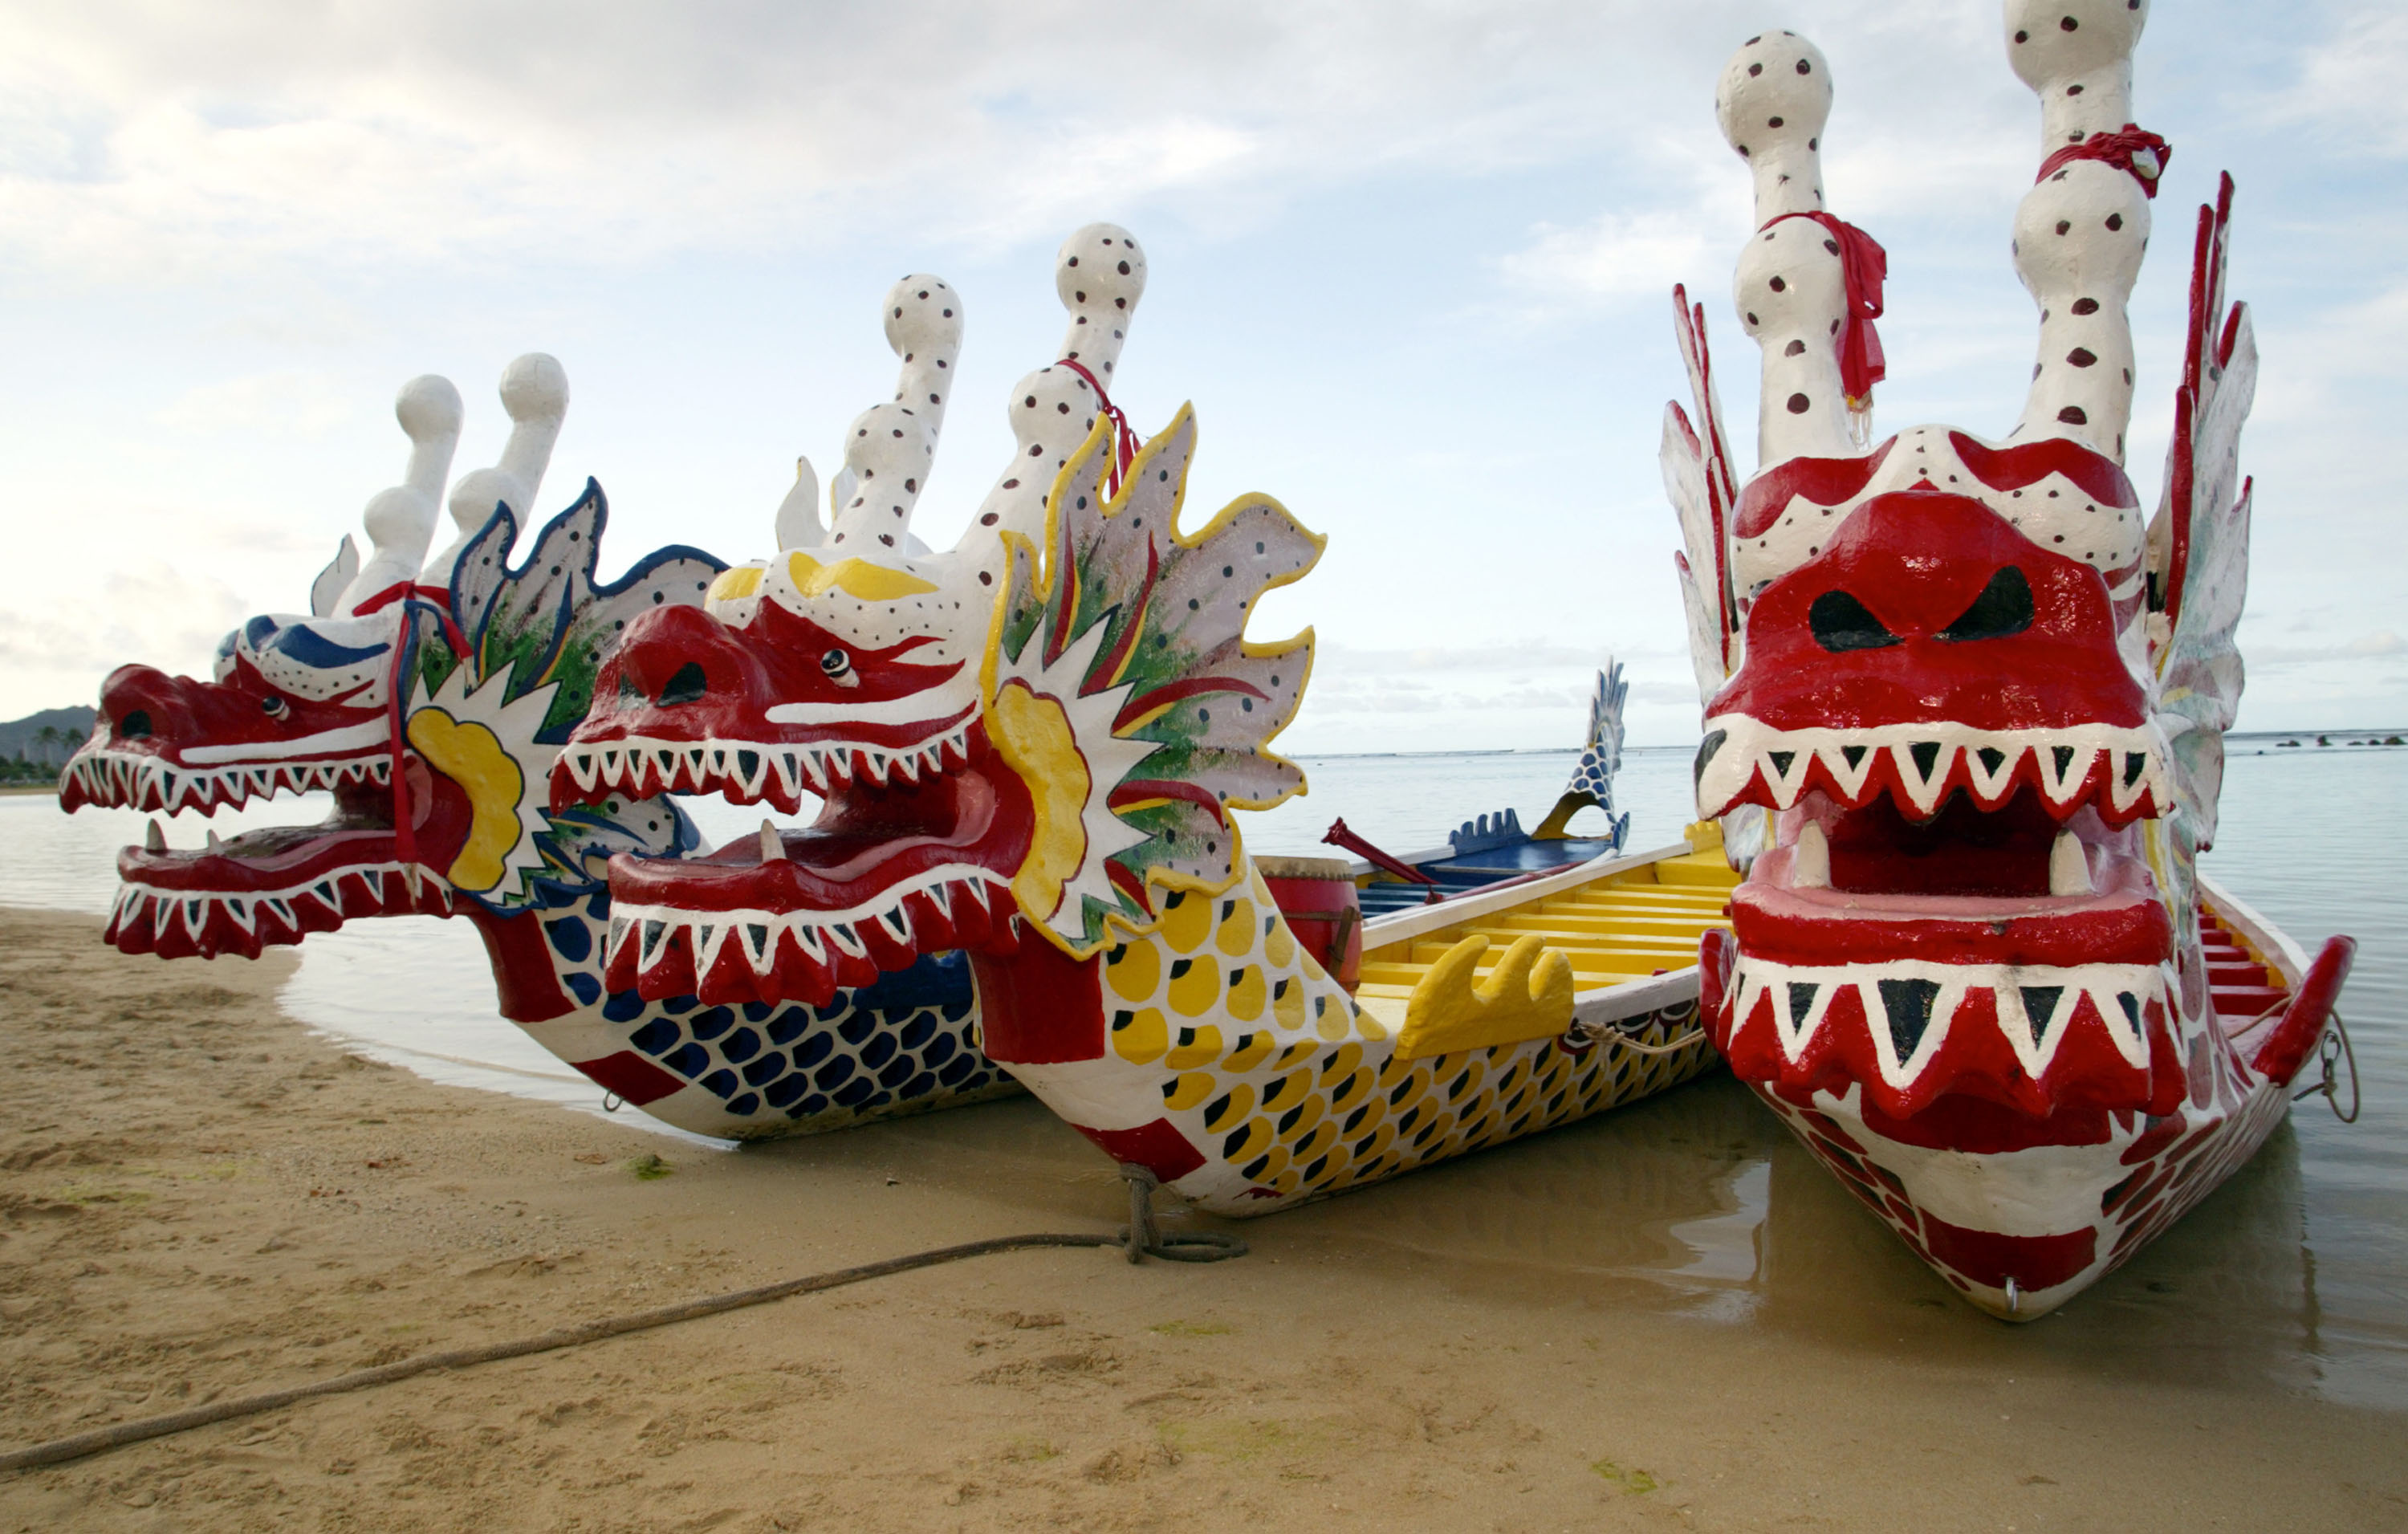 Dragon boats wait for racers ahead of the Dragon Boat Festival in Honolulu Hawaii